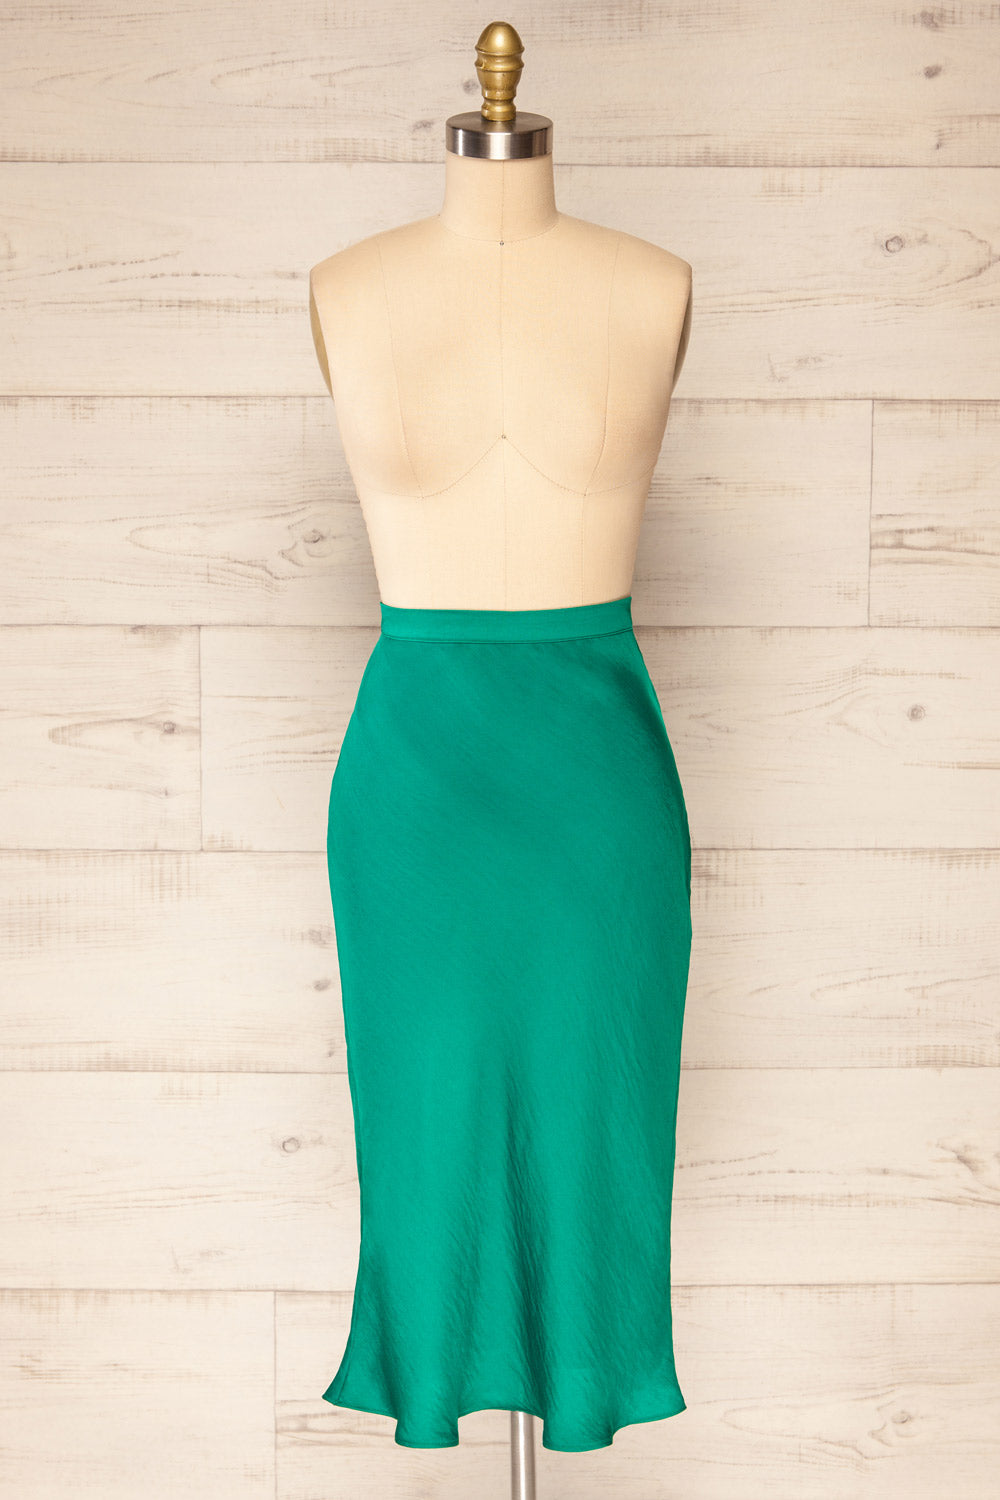 Nikaia Green Silky High-Waisted Midi Skirt | La petite garçonne front view